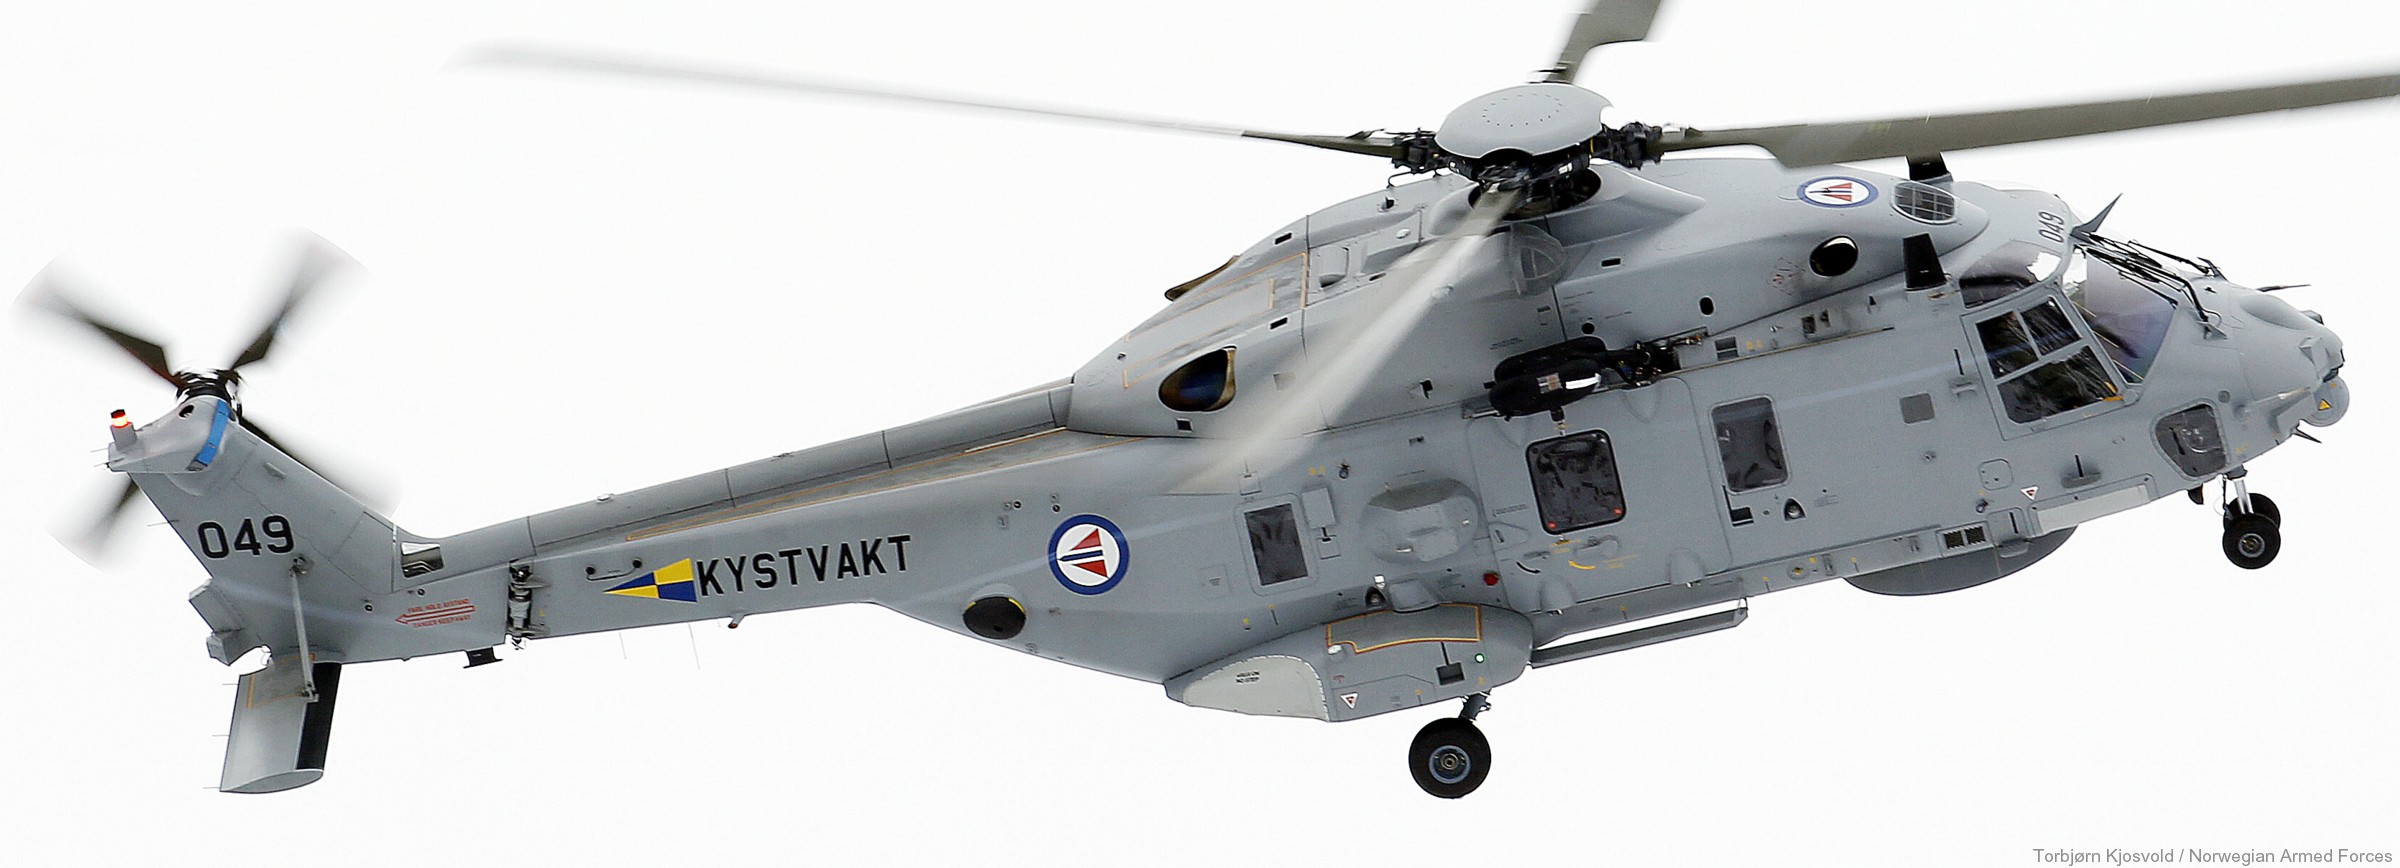 nh90 nfh asw helicopter royal norwegian coast guard navy air force kystvakt sjoforsvaret 049 04